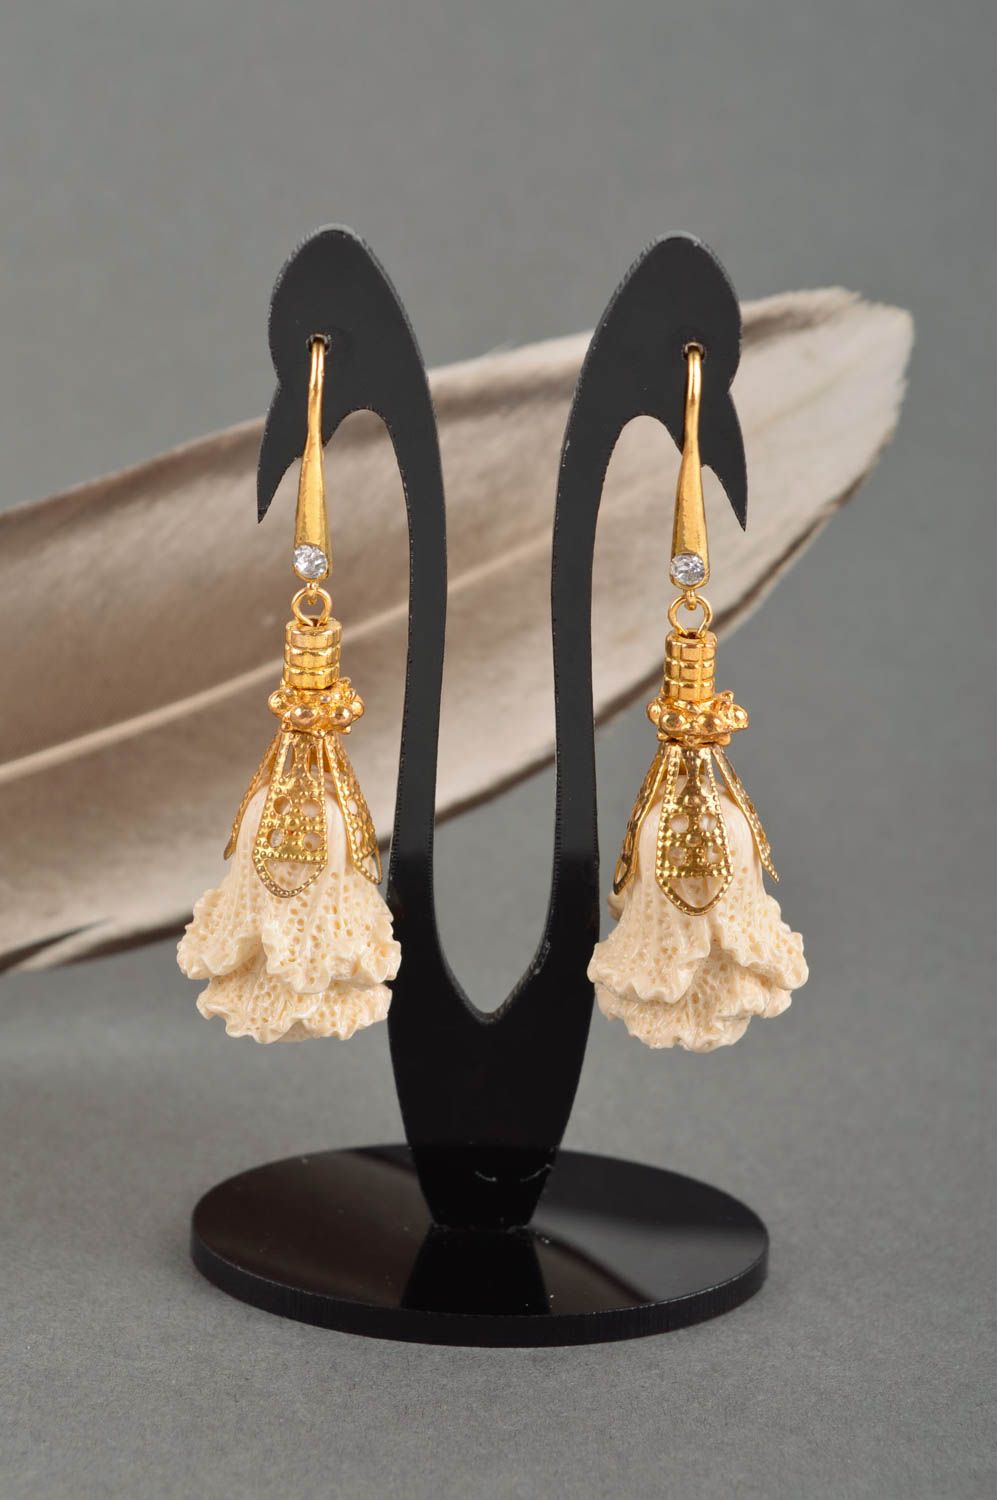 Handmade earrings gemstone jewelry designer accessories womens earrings photo 1